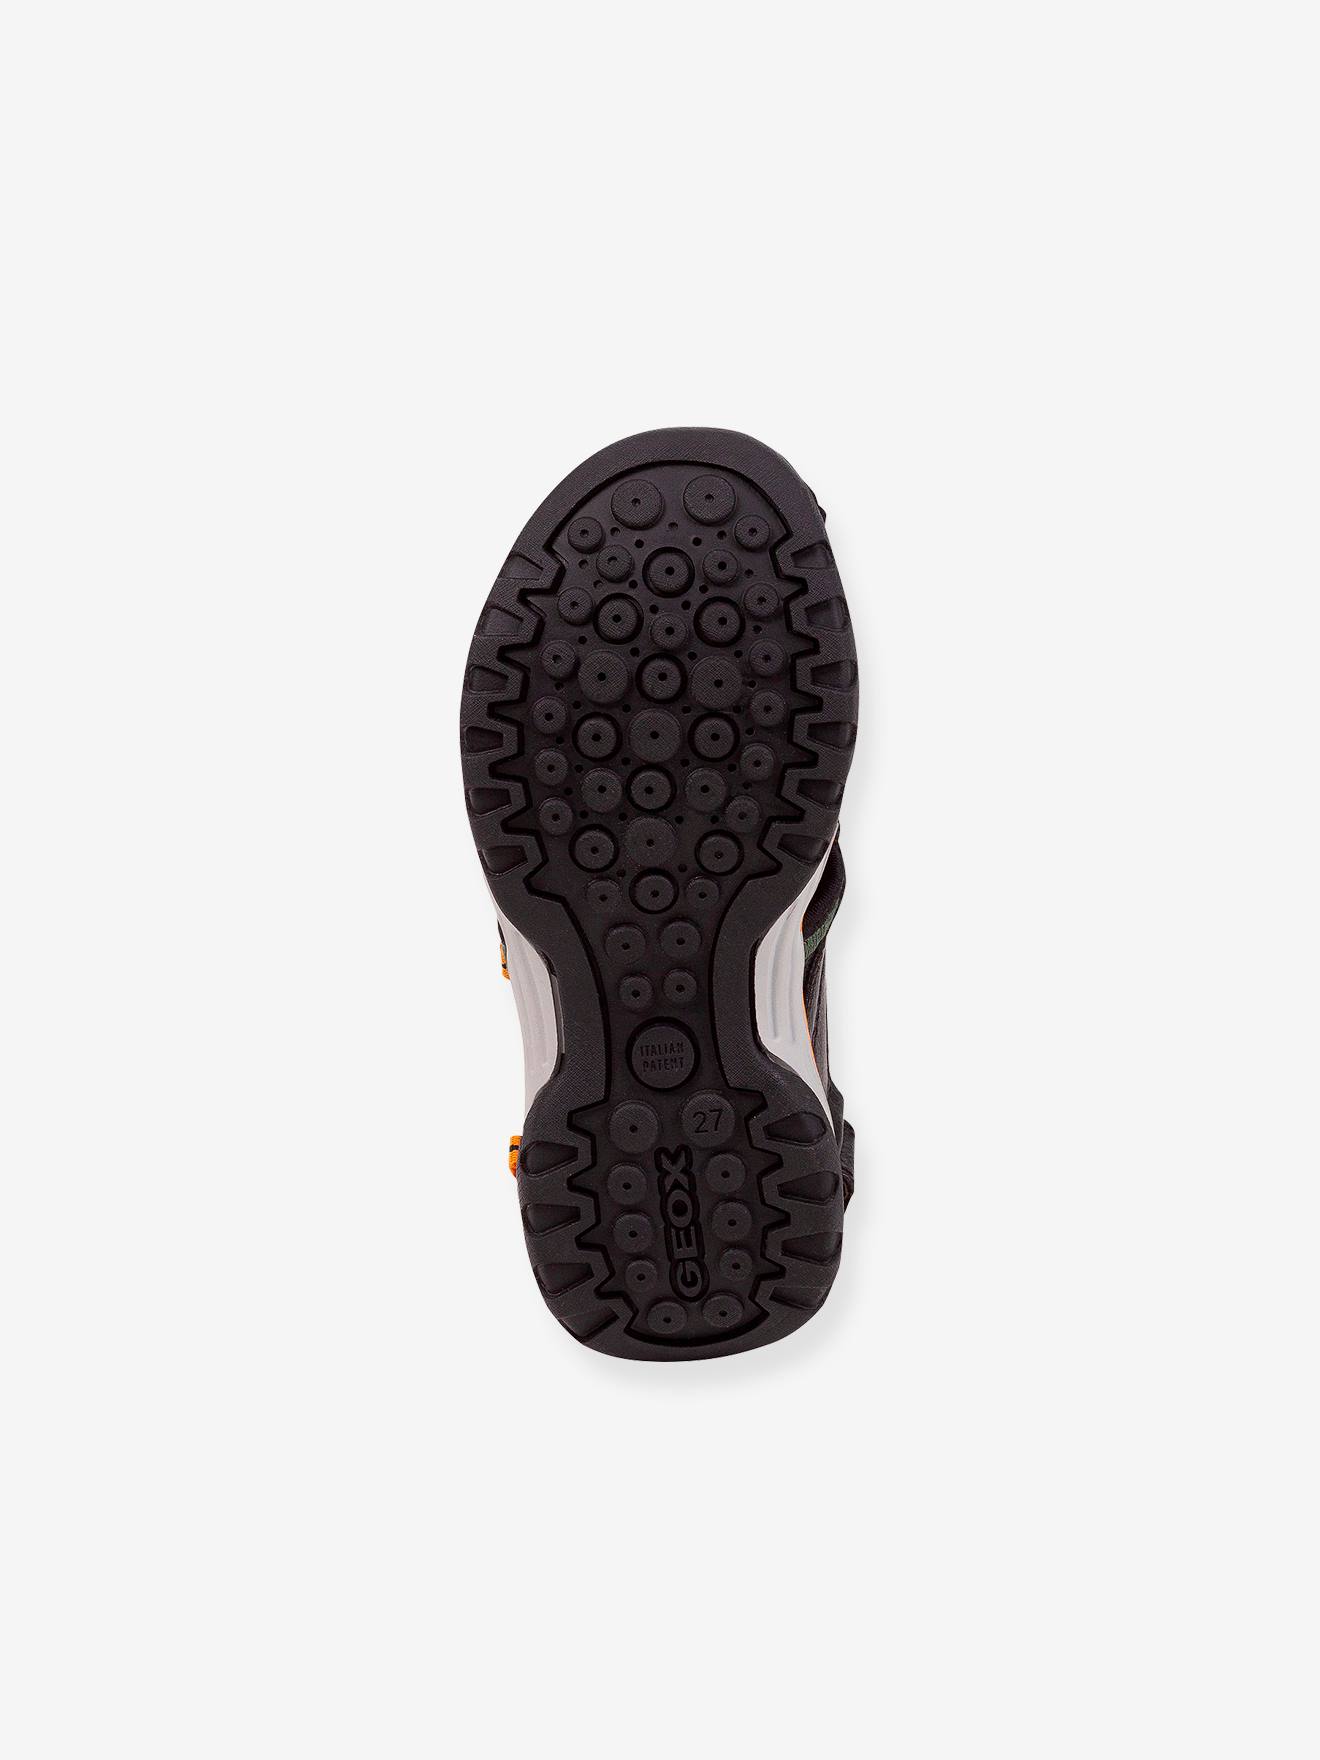 Borealis B.B for Sandals solid, by dark - J. Boys, black GEOX® Shoes